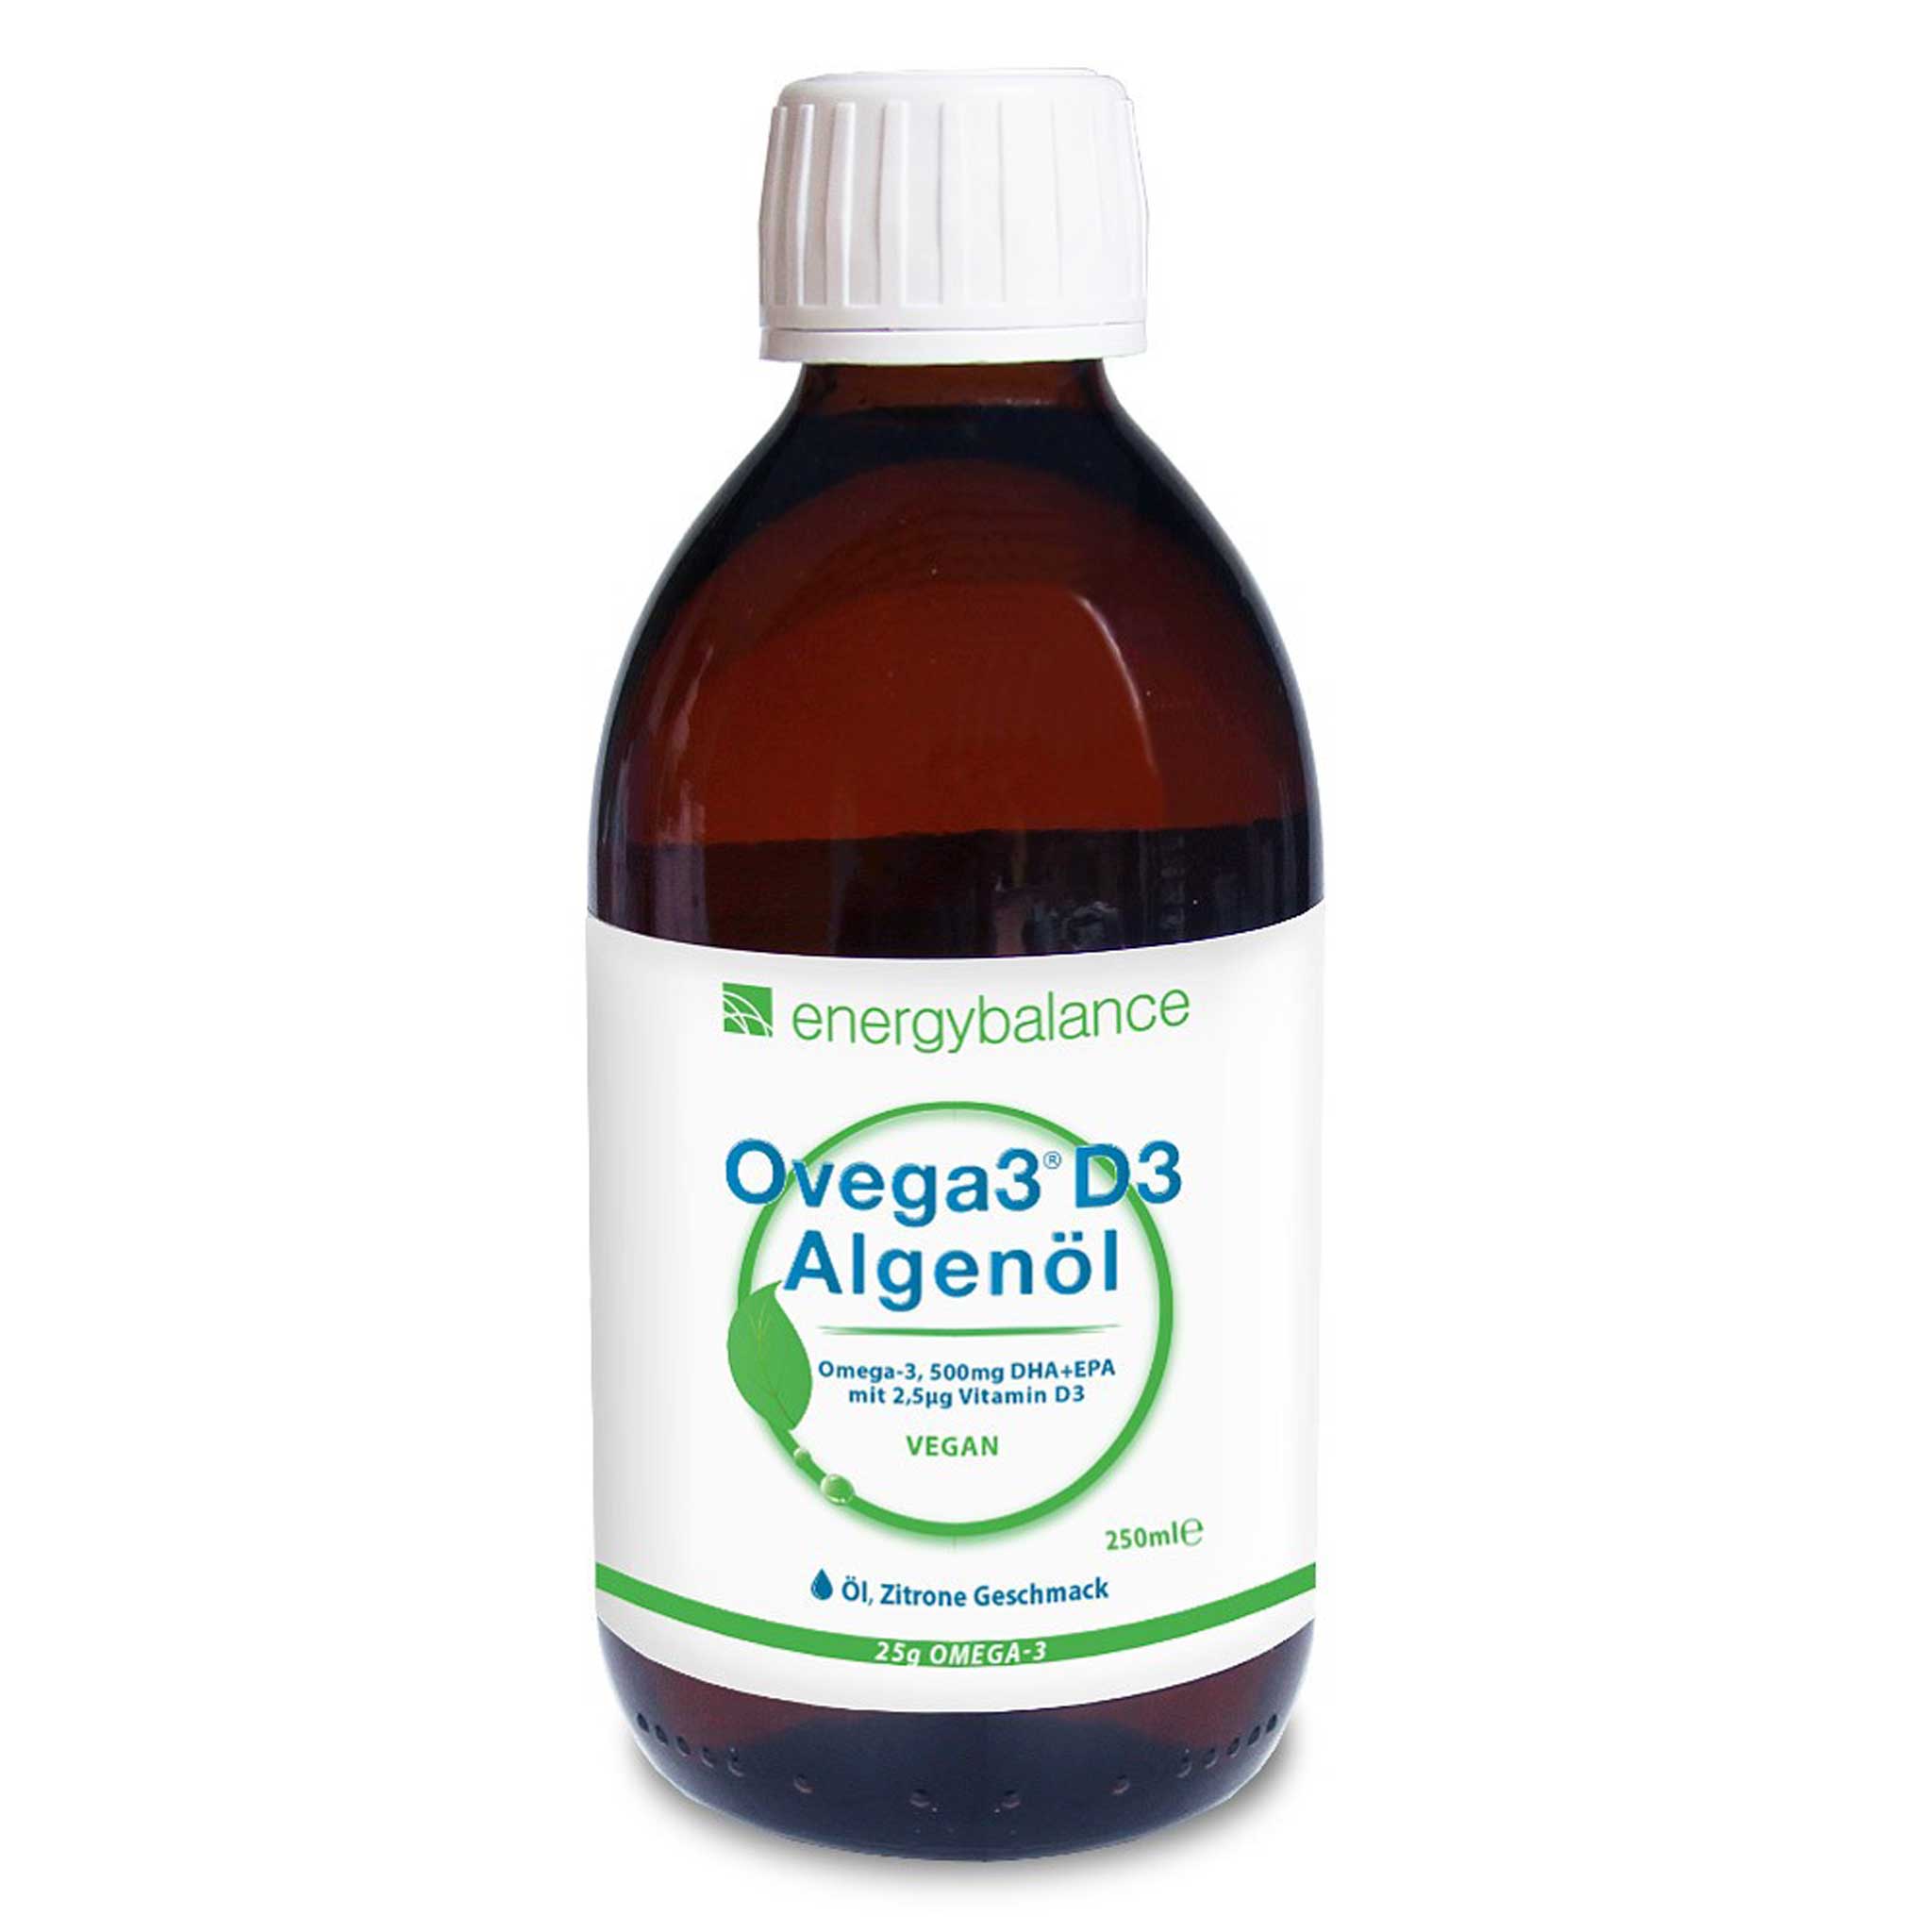 Ovega3 D3 Algenöl von Energybalance